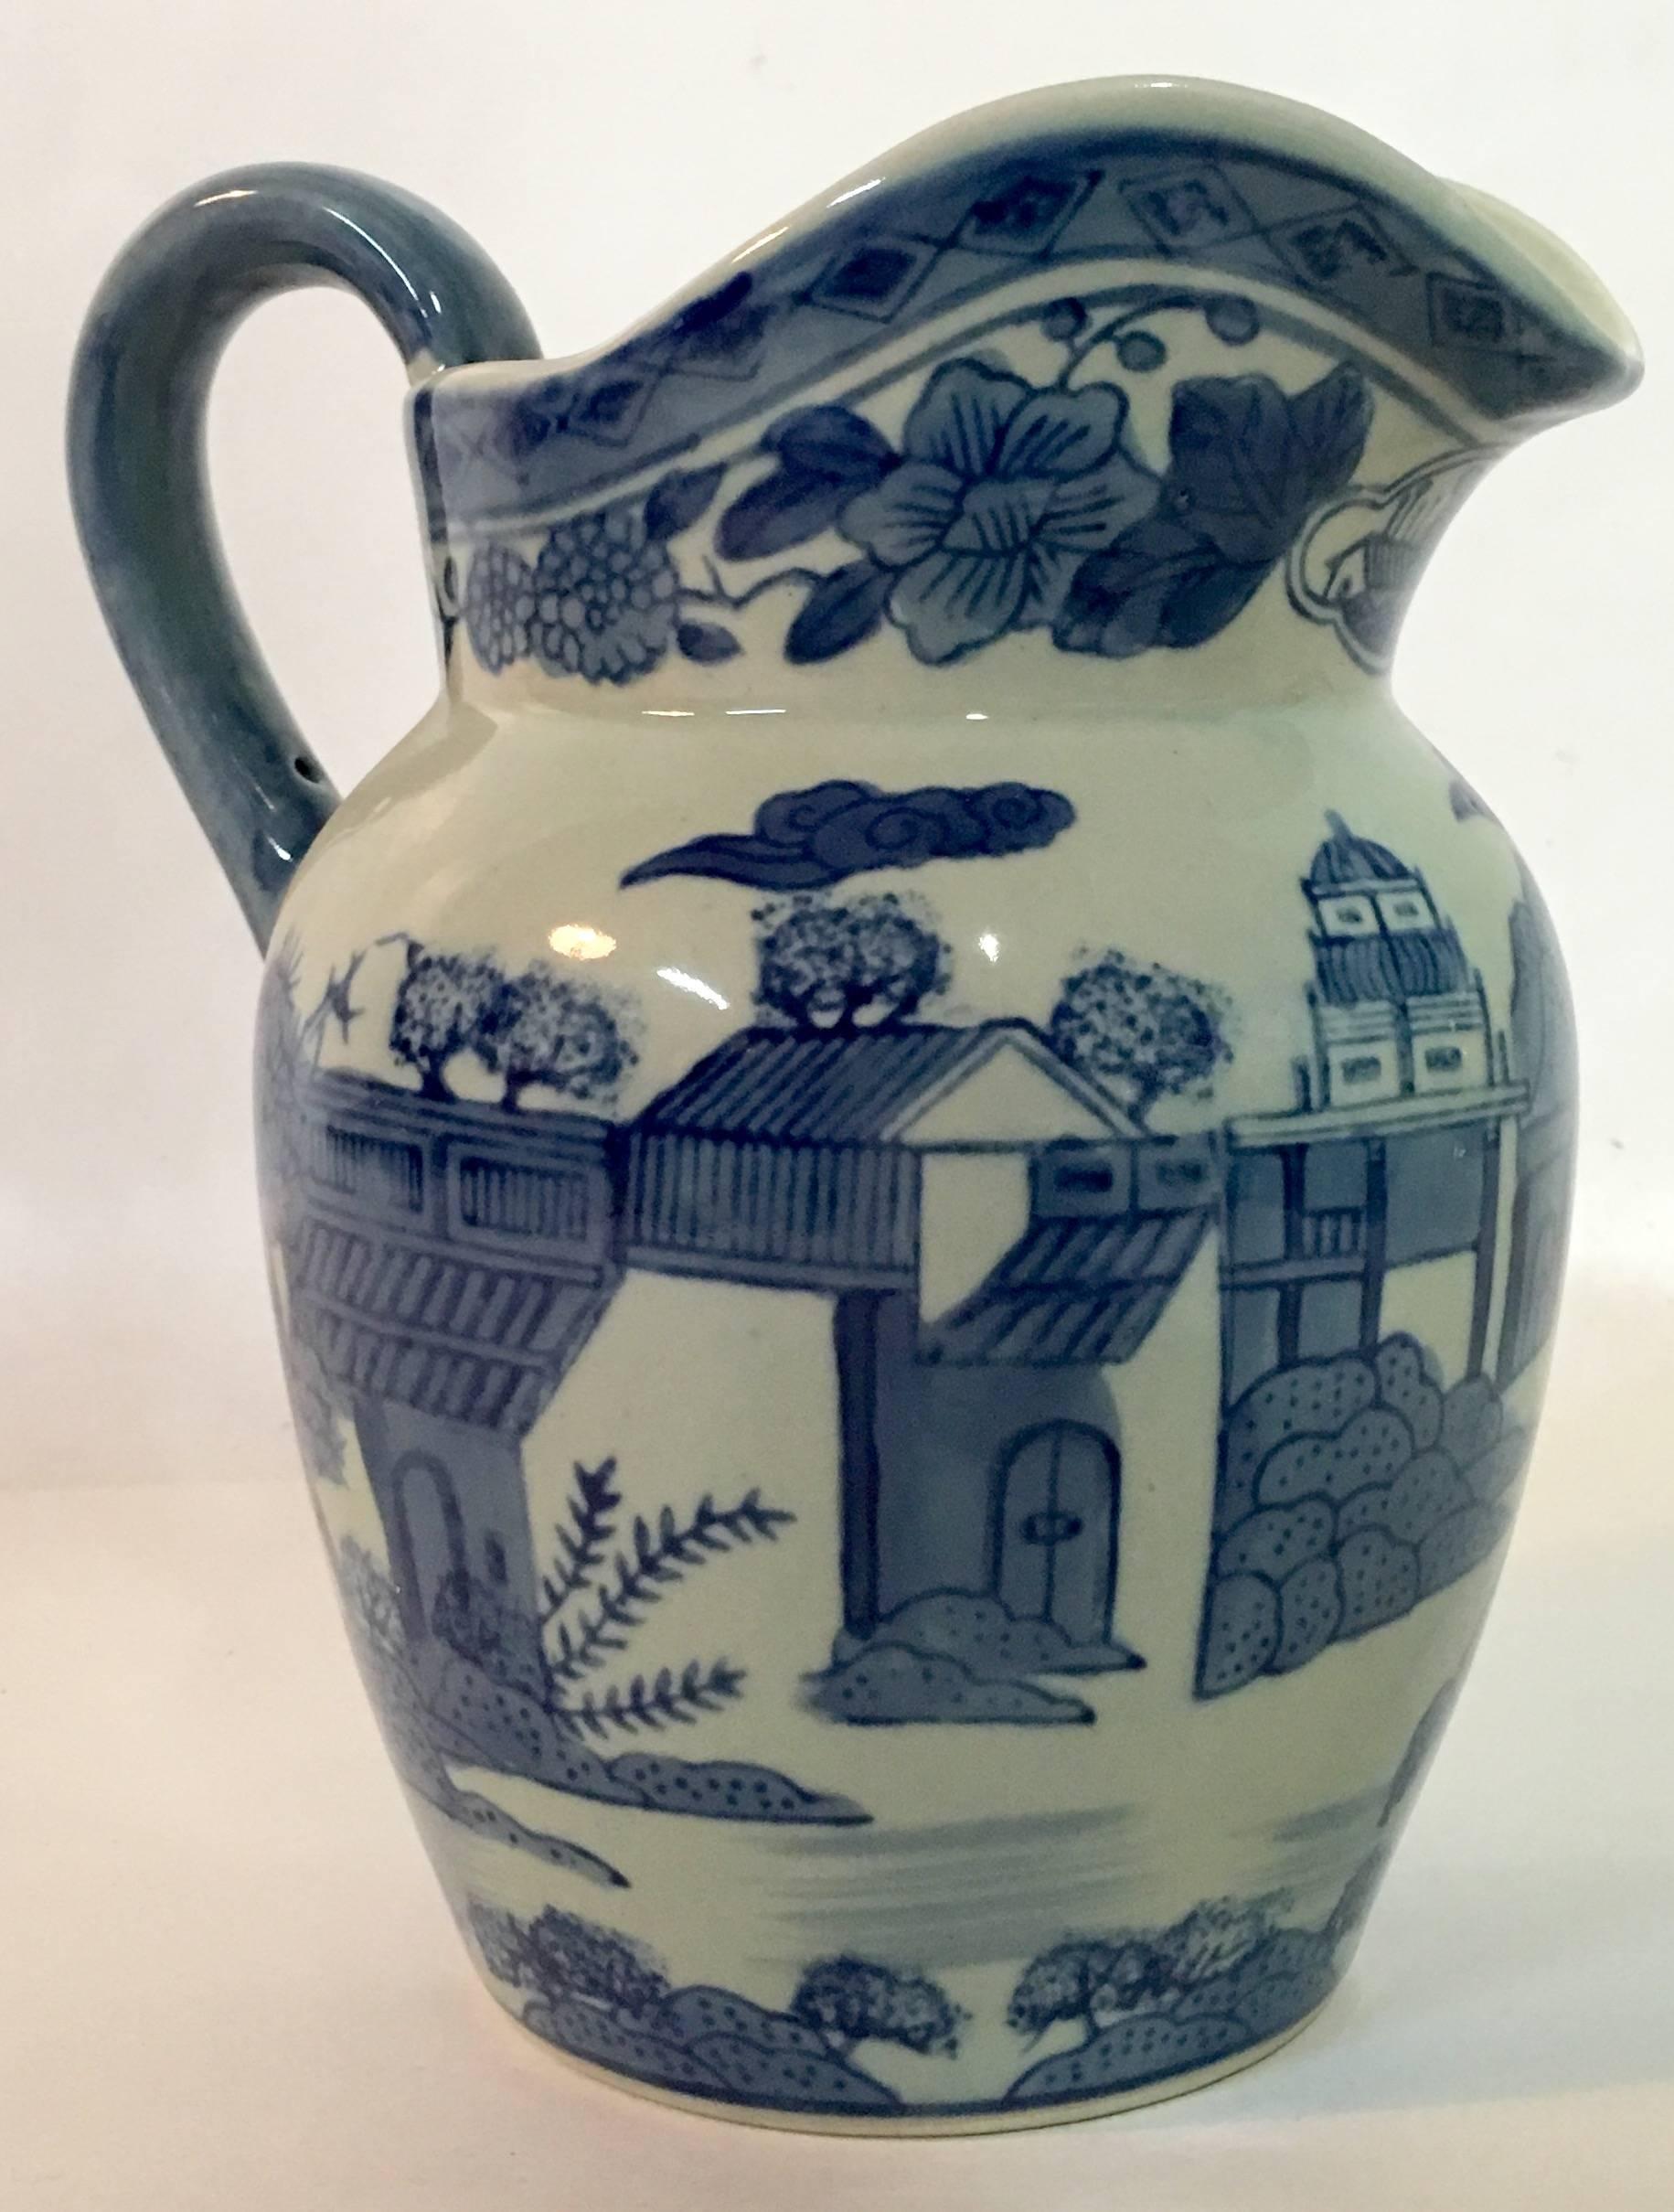 Antique blue and white handled beverage pitcher village scene. Blue handle detail. Mark appears on underside.